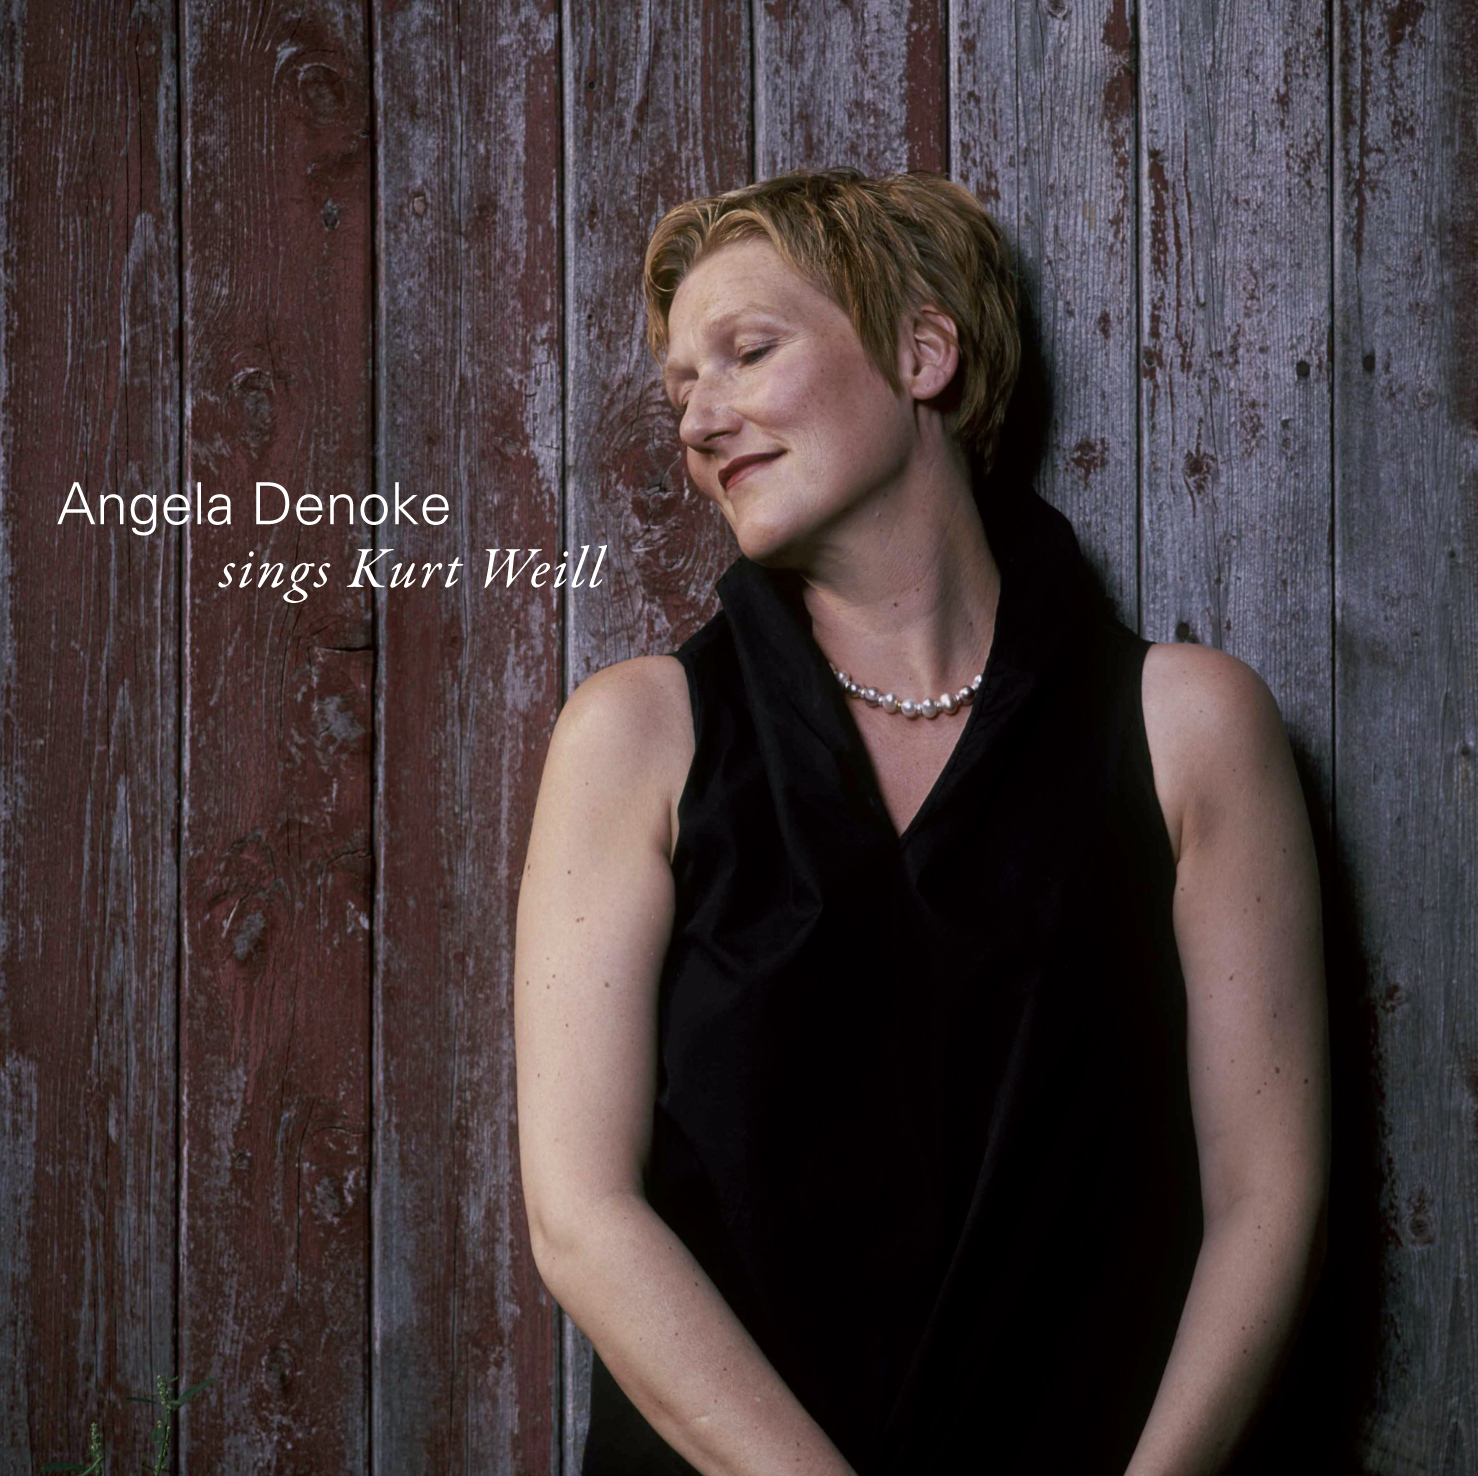 Poster for Angela Denoke's Weill programm, designed by Honigtee Music.